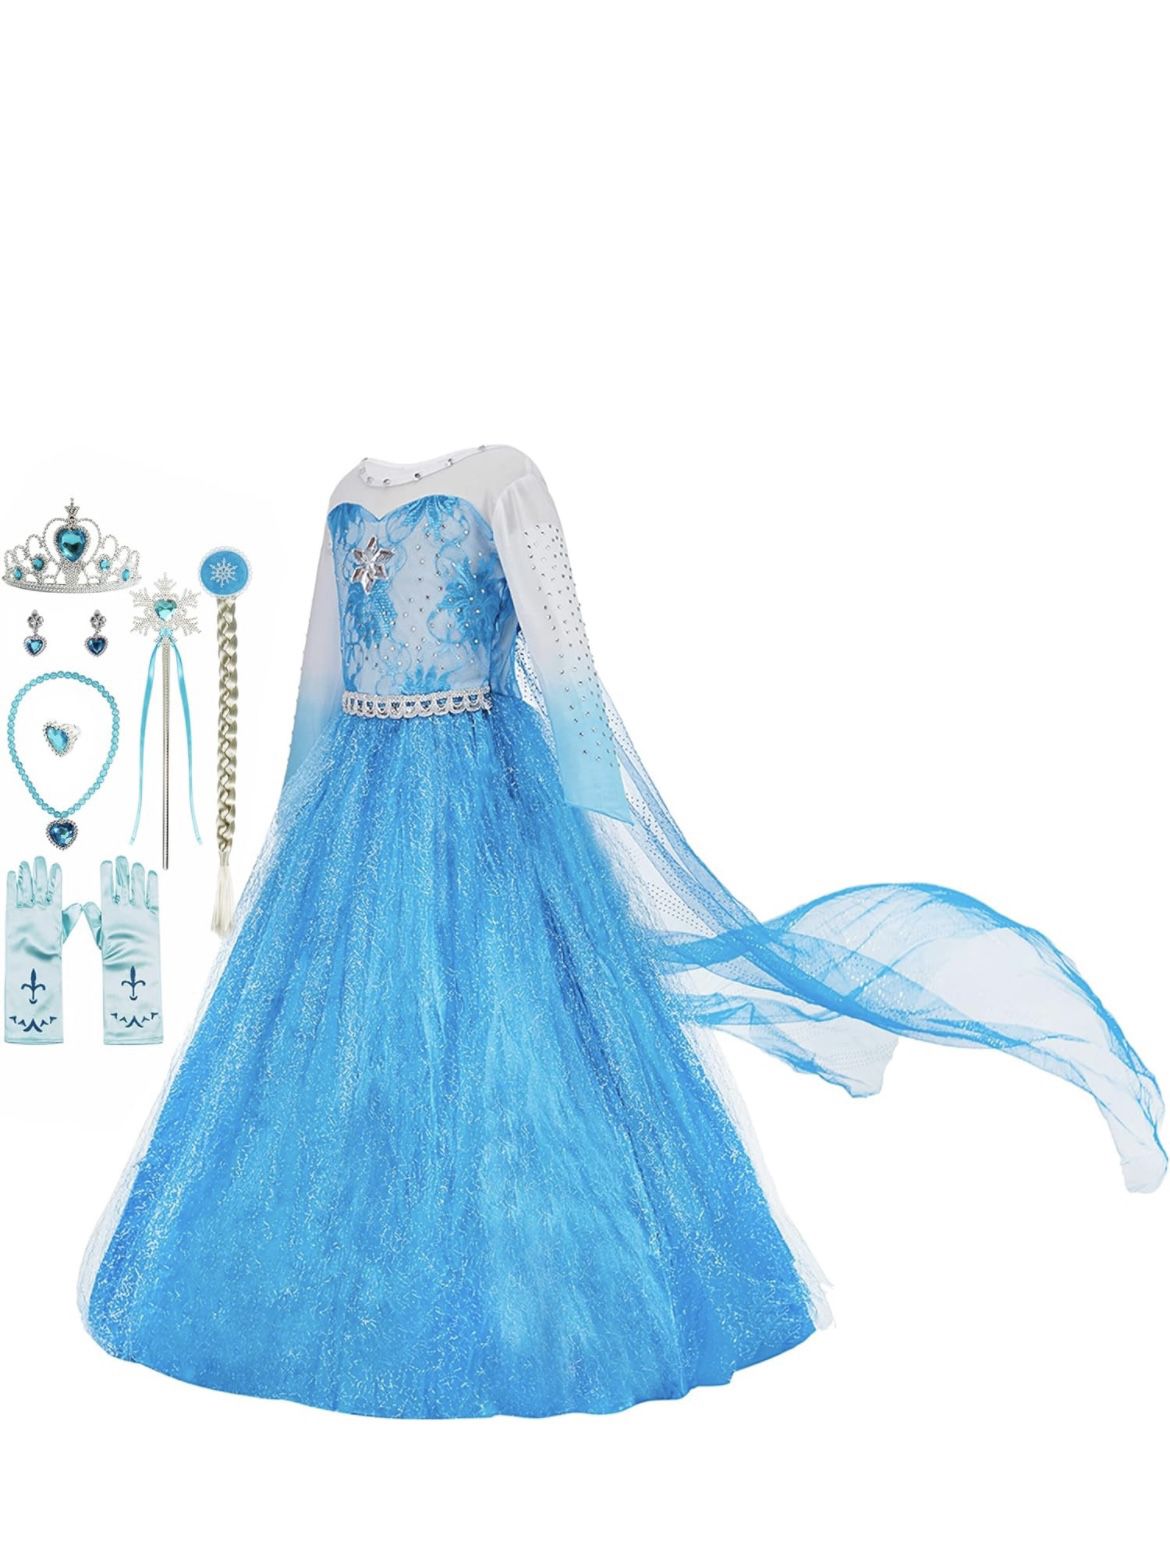 Little Princess Costume-Size 3 